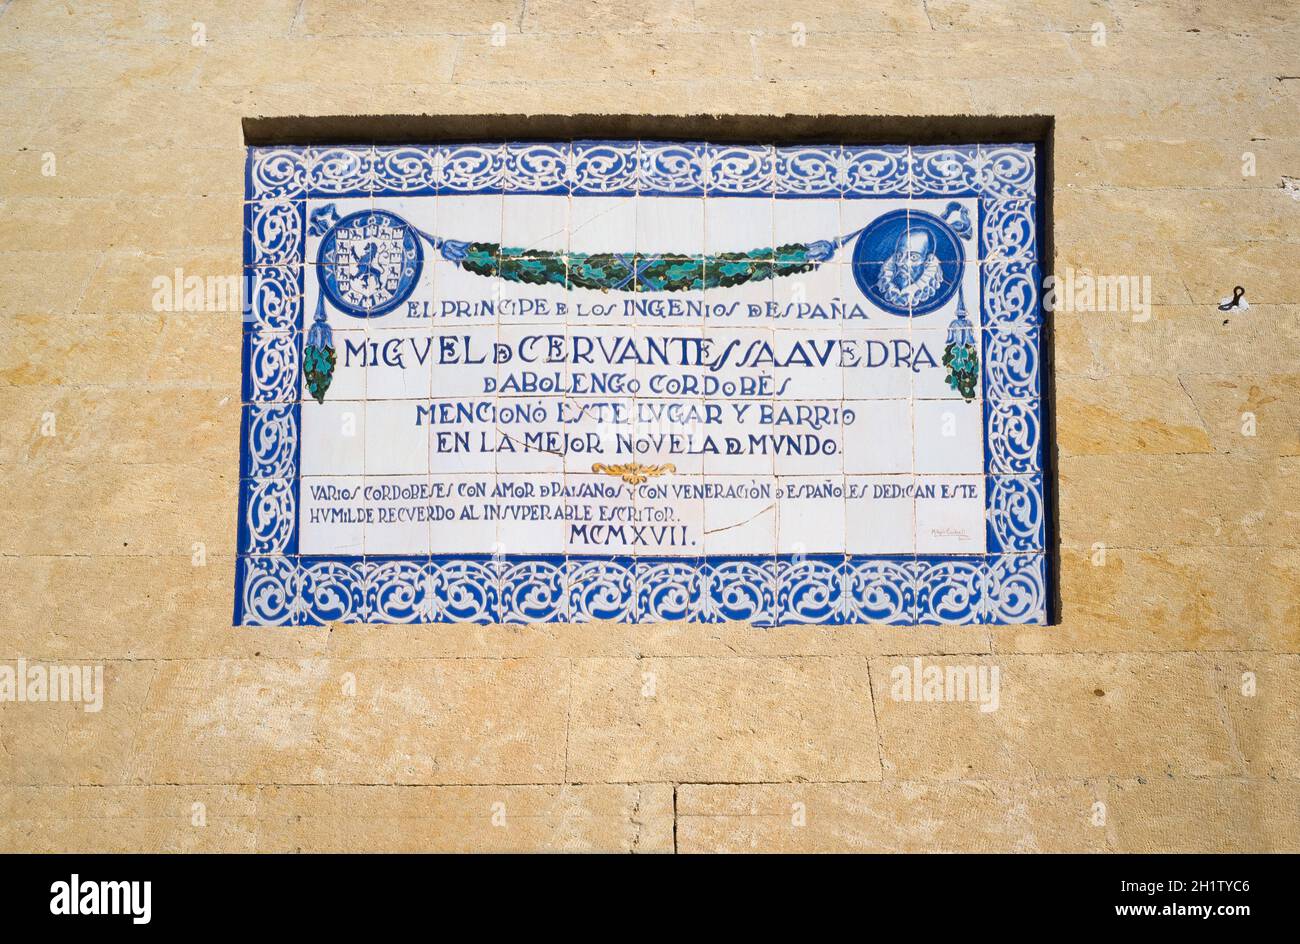 Cordoba, Spain - Dec 7th 2018: Miguel de Cervantes Saavedra memorial plaque. Plaza del Potro de Cordoba, Spain Stock Photo